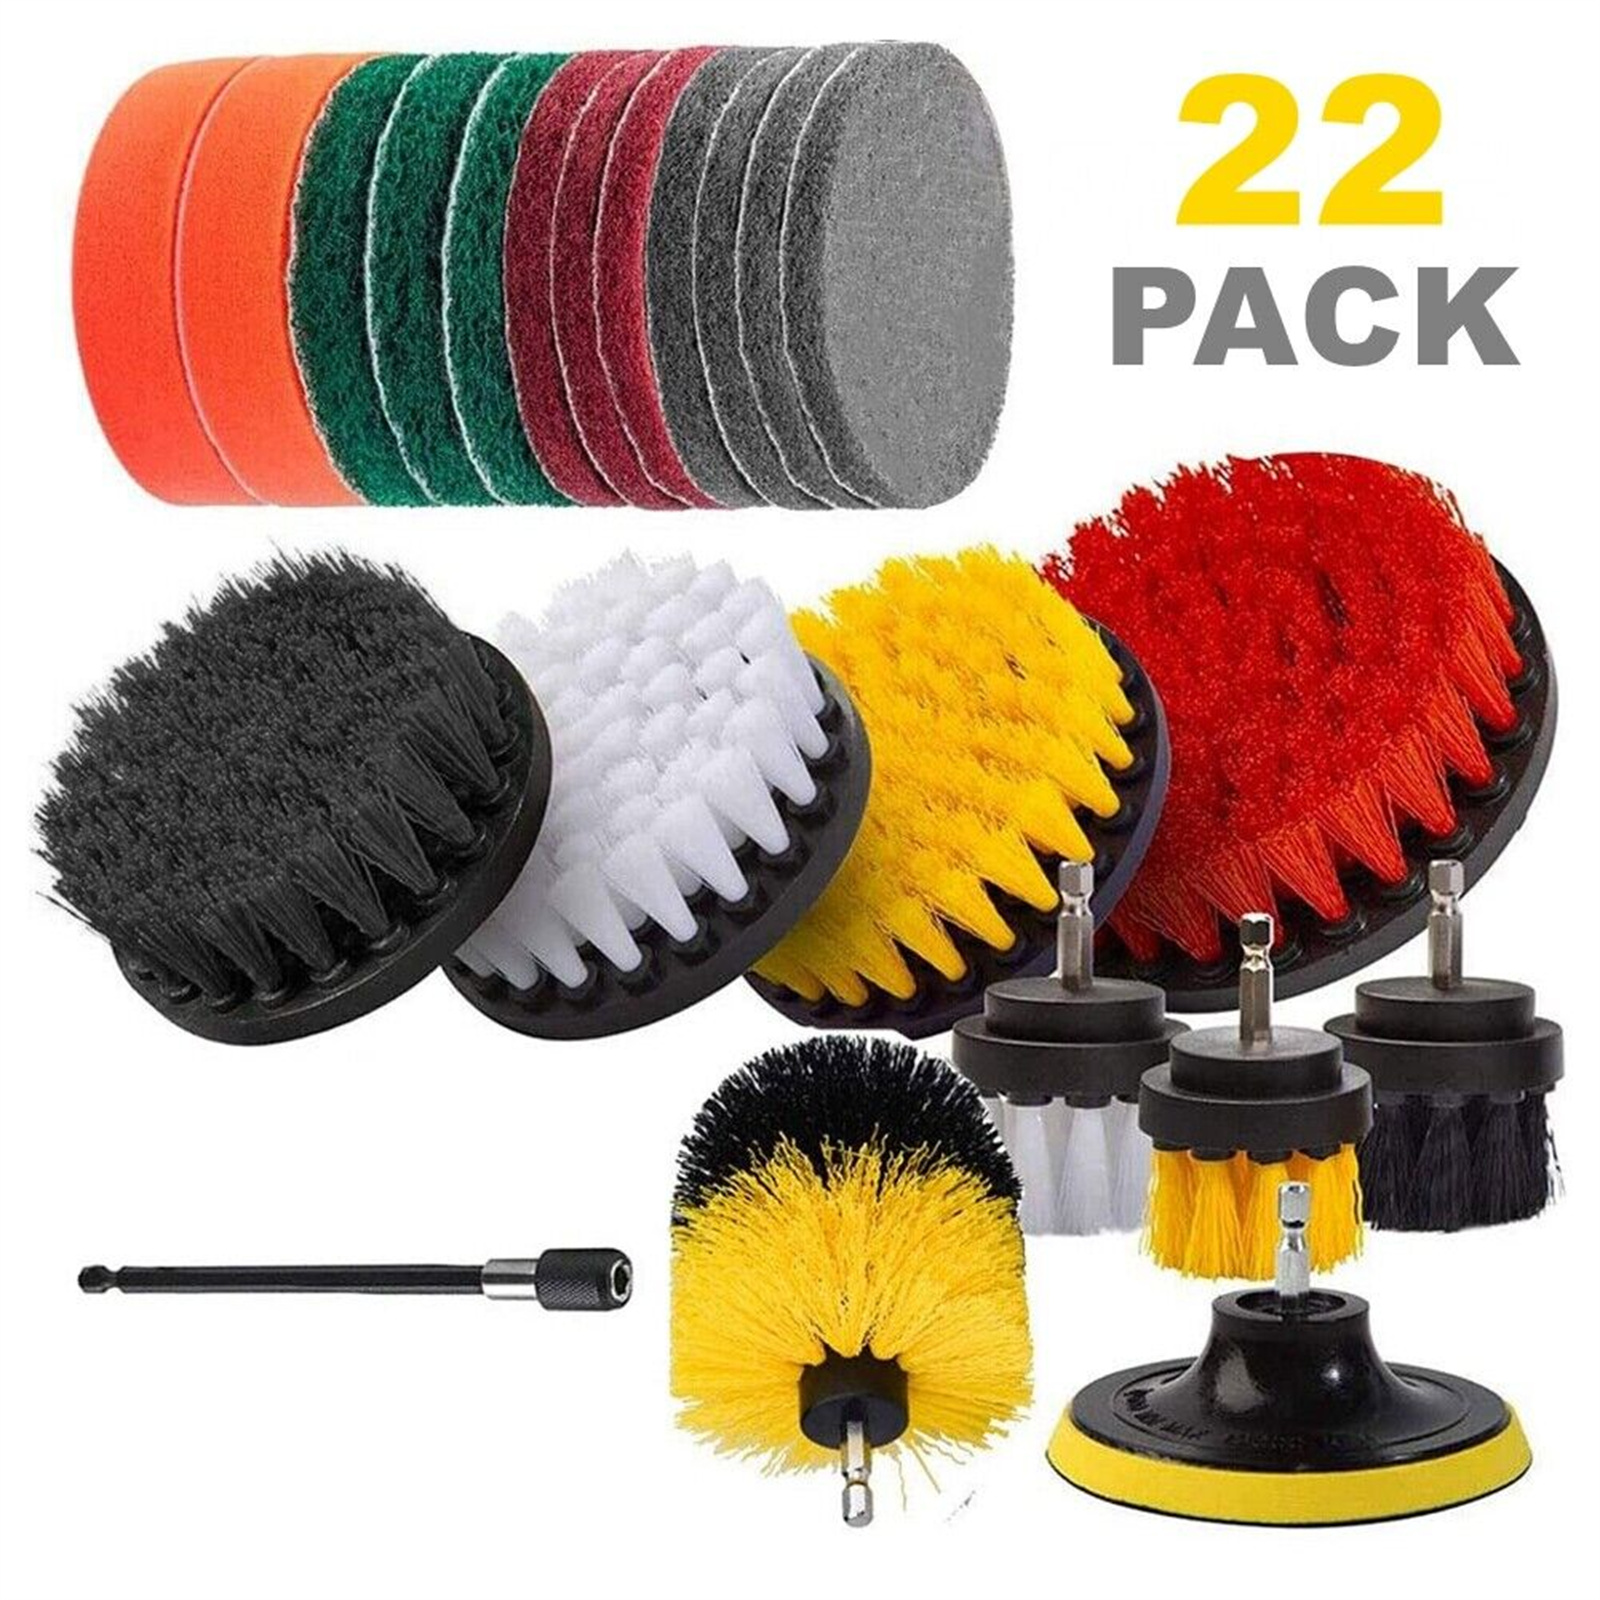 22 Pieces Drill Brush Attachment Set Power Scrubber Brush Pad Sponge Kit With Extend Attachment For Tile Sealants Bathtub Sinks Floor Wheels Carpet